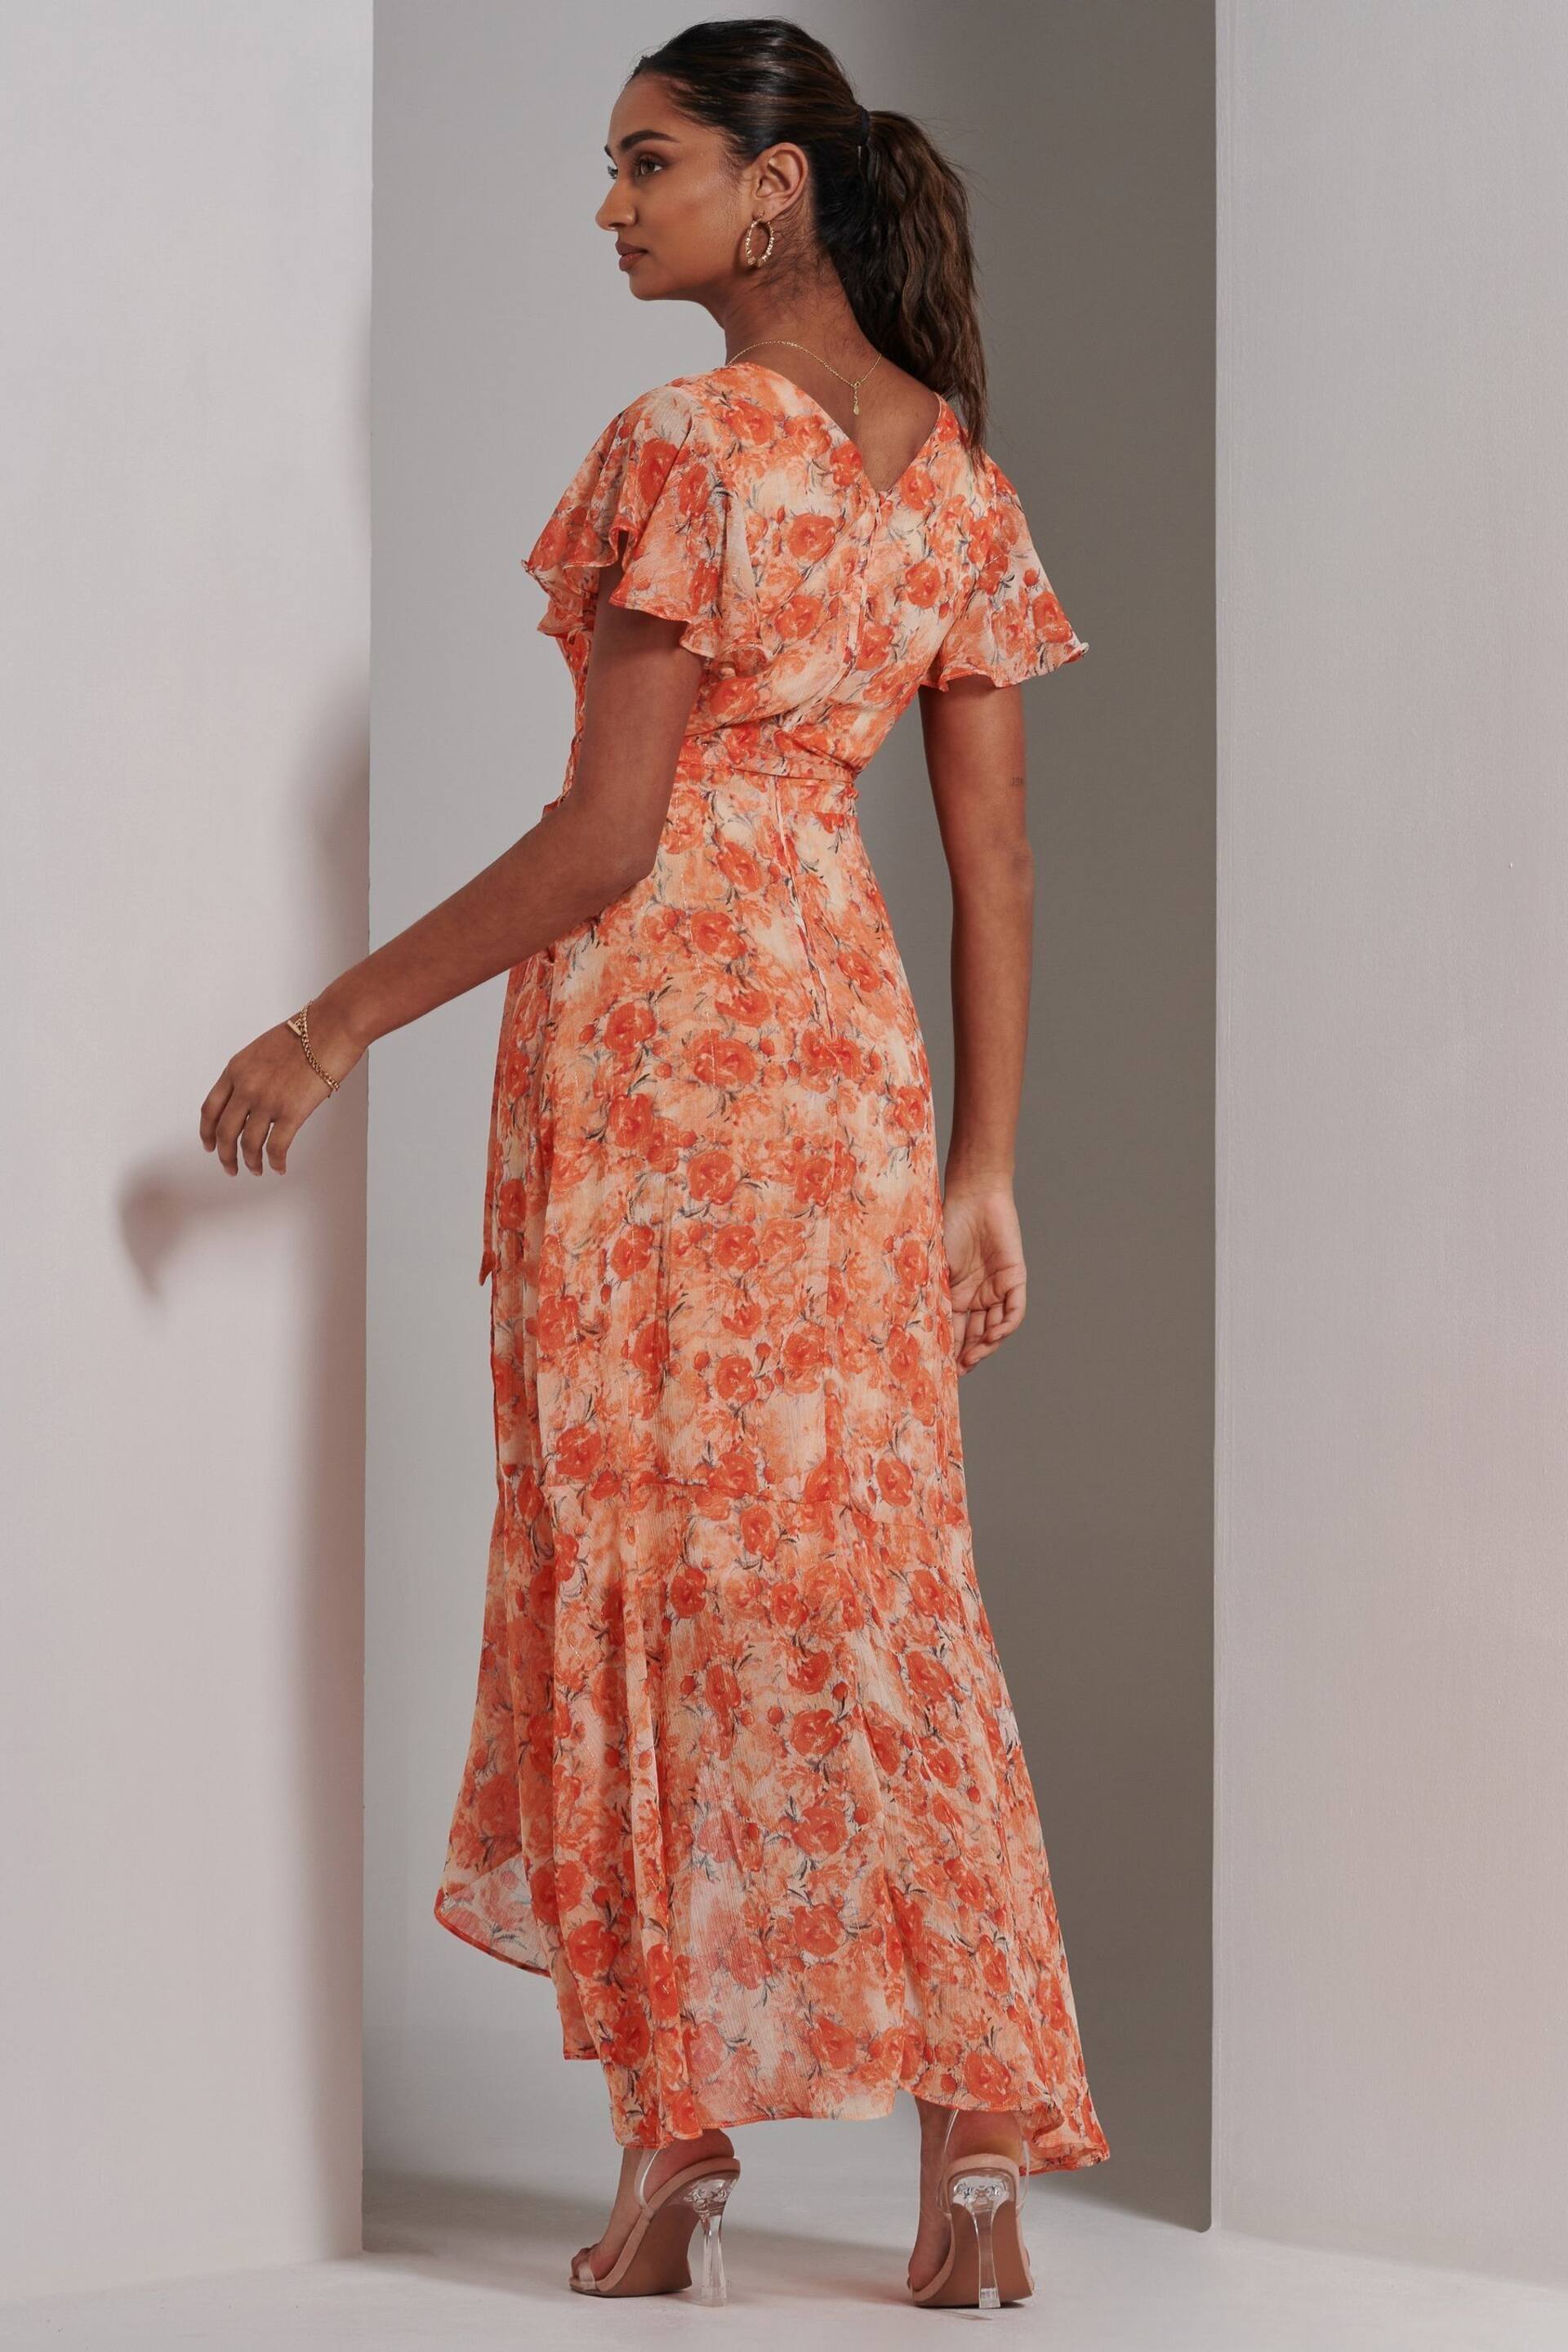 Jolie Moi Orange Haylie Frill Chiffon Maxi Dress - Image 2 of 6